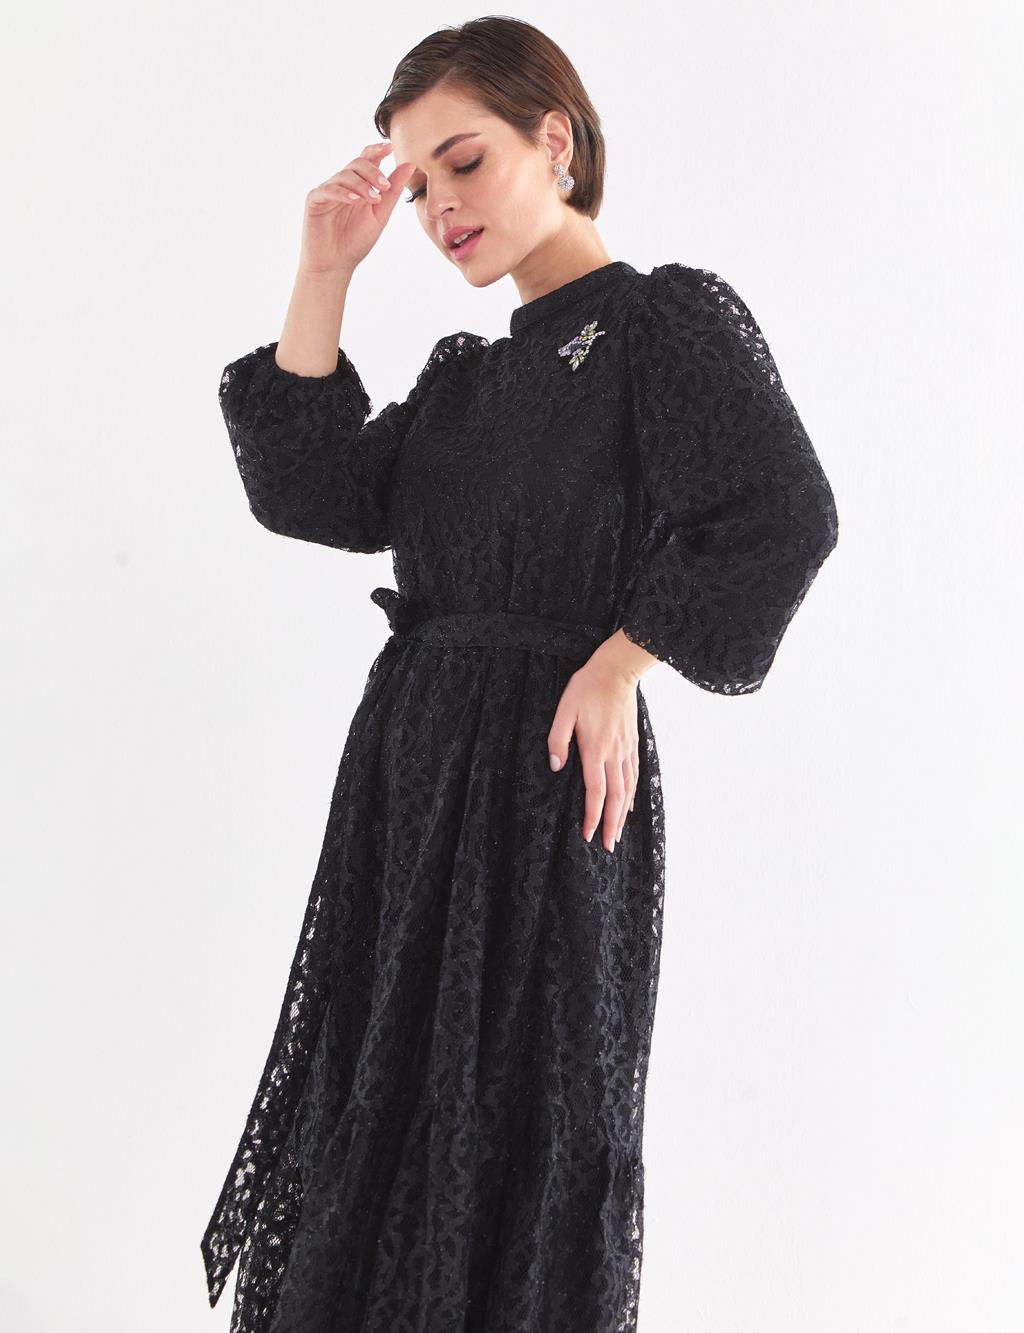 Belted Lace Dress Black